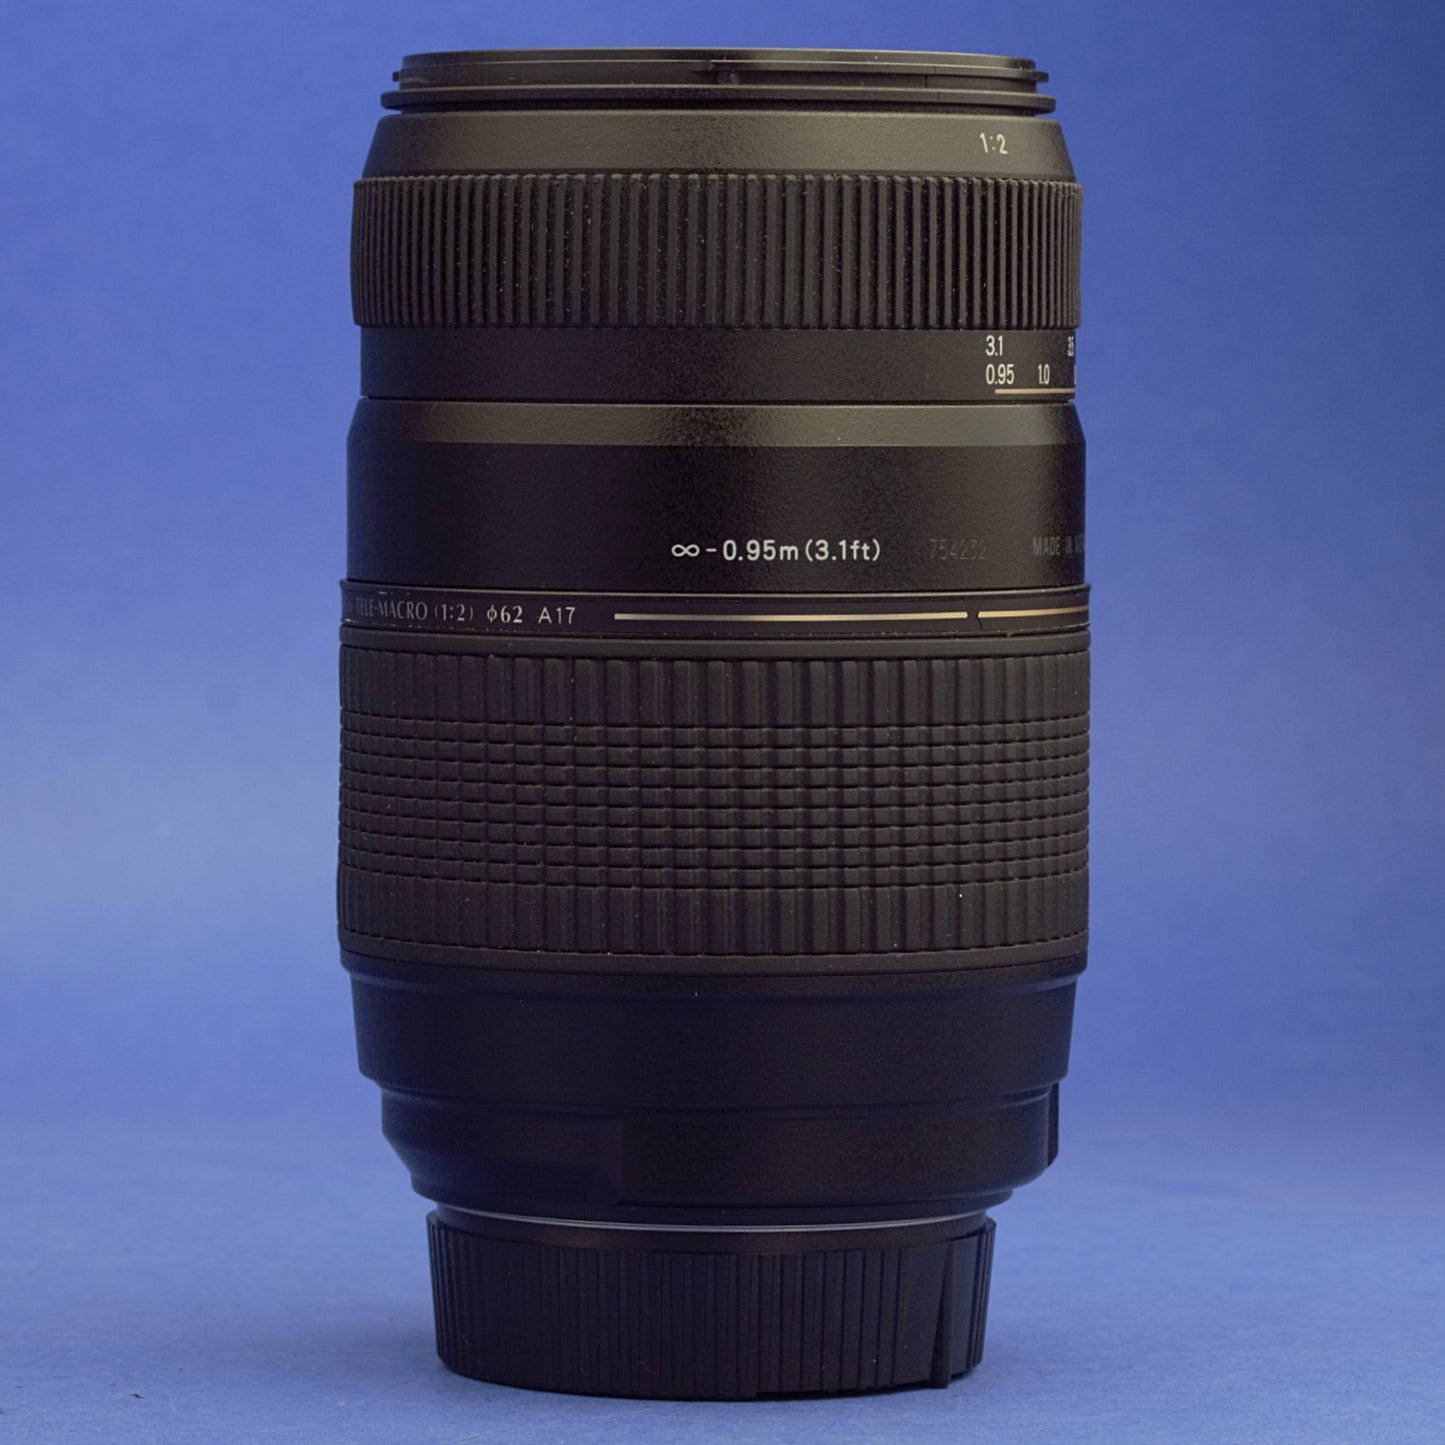 Nikon AF-D Mount Tamron 70-300mm 4-5.6 LD Di Tele-Macro Lens Near Mint Condition